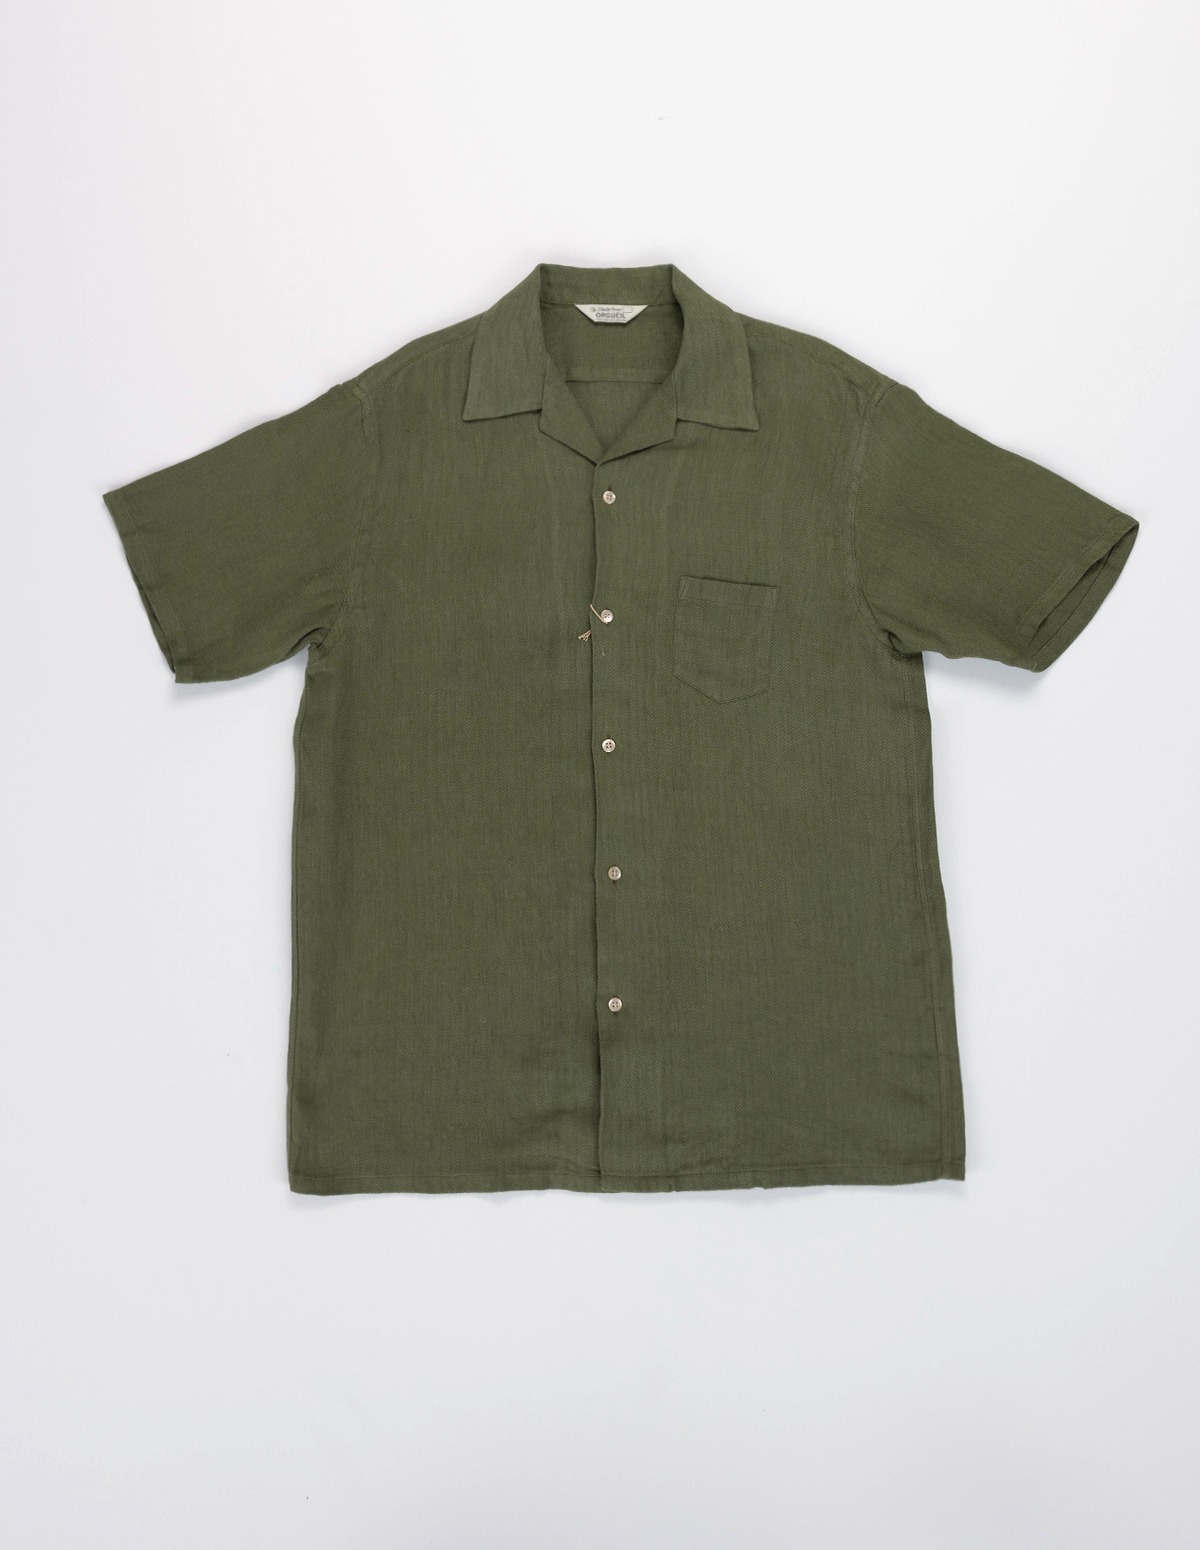 OR-5092B Open Collar Shirt Linen Herringbone (Olive)